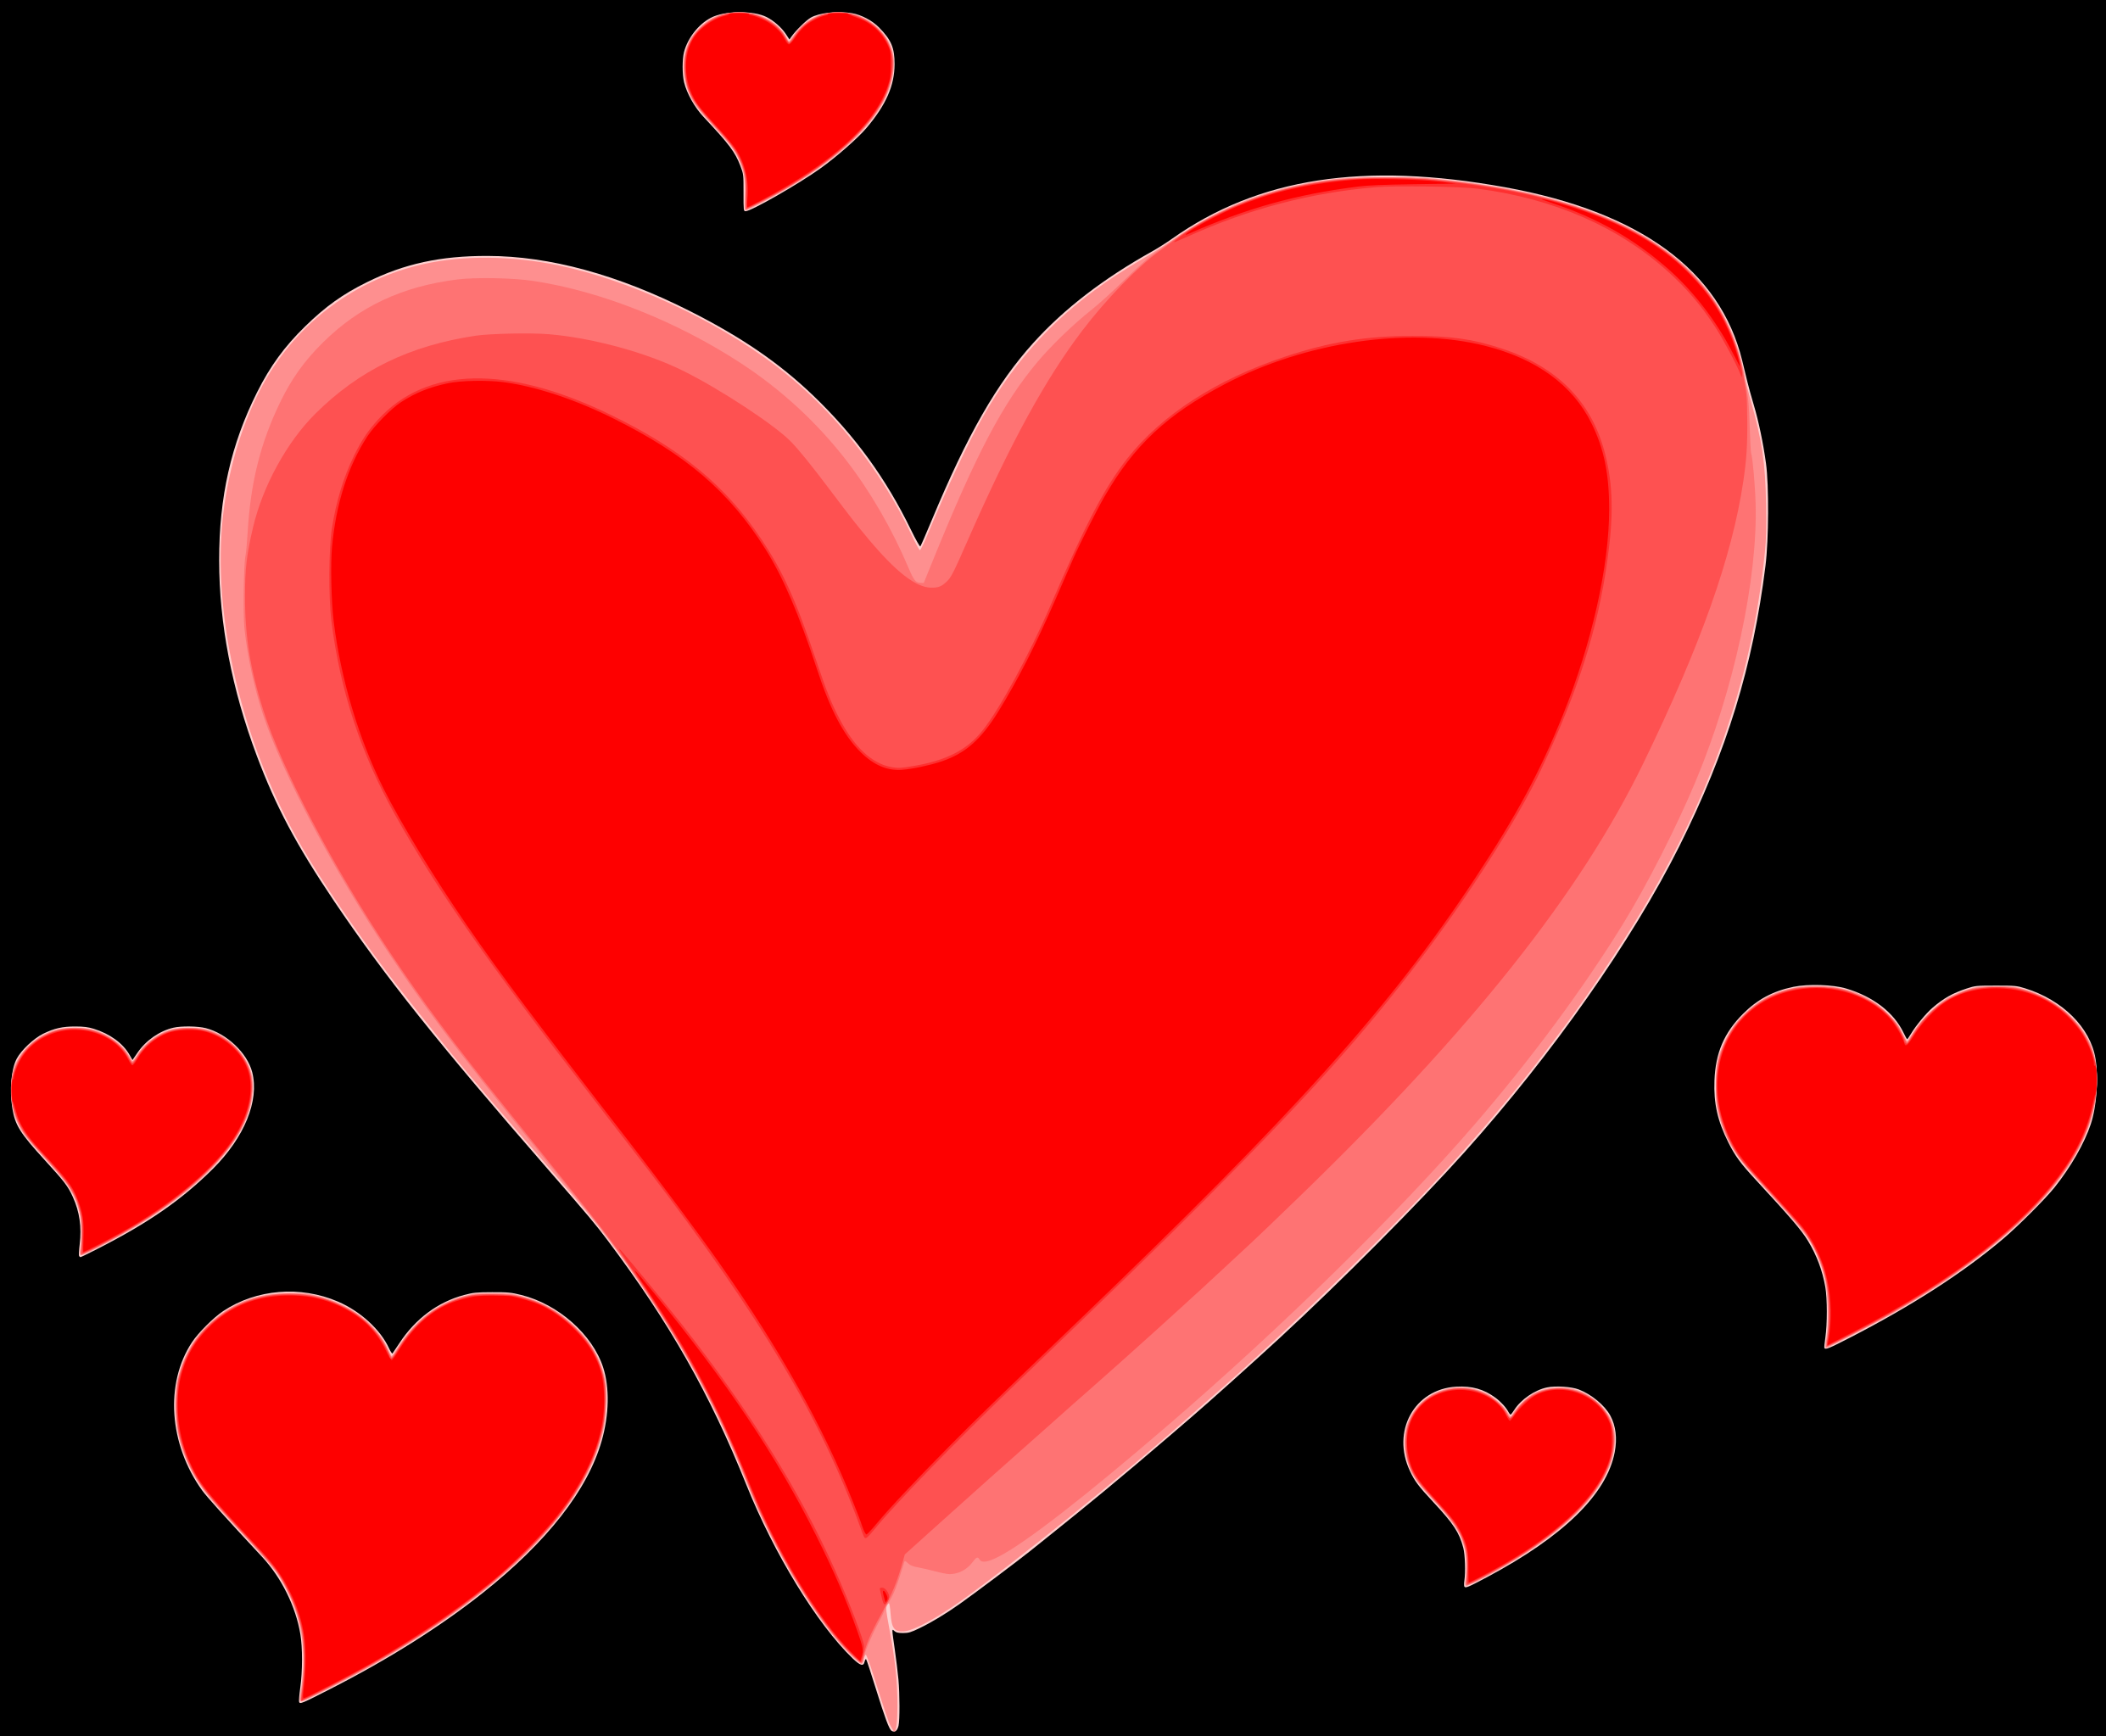 FileDrawn love heartssvg   Wikipedia